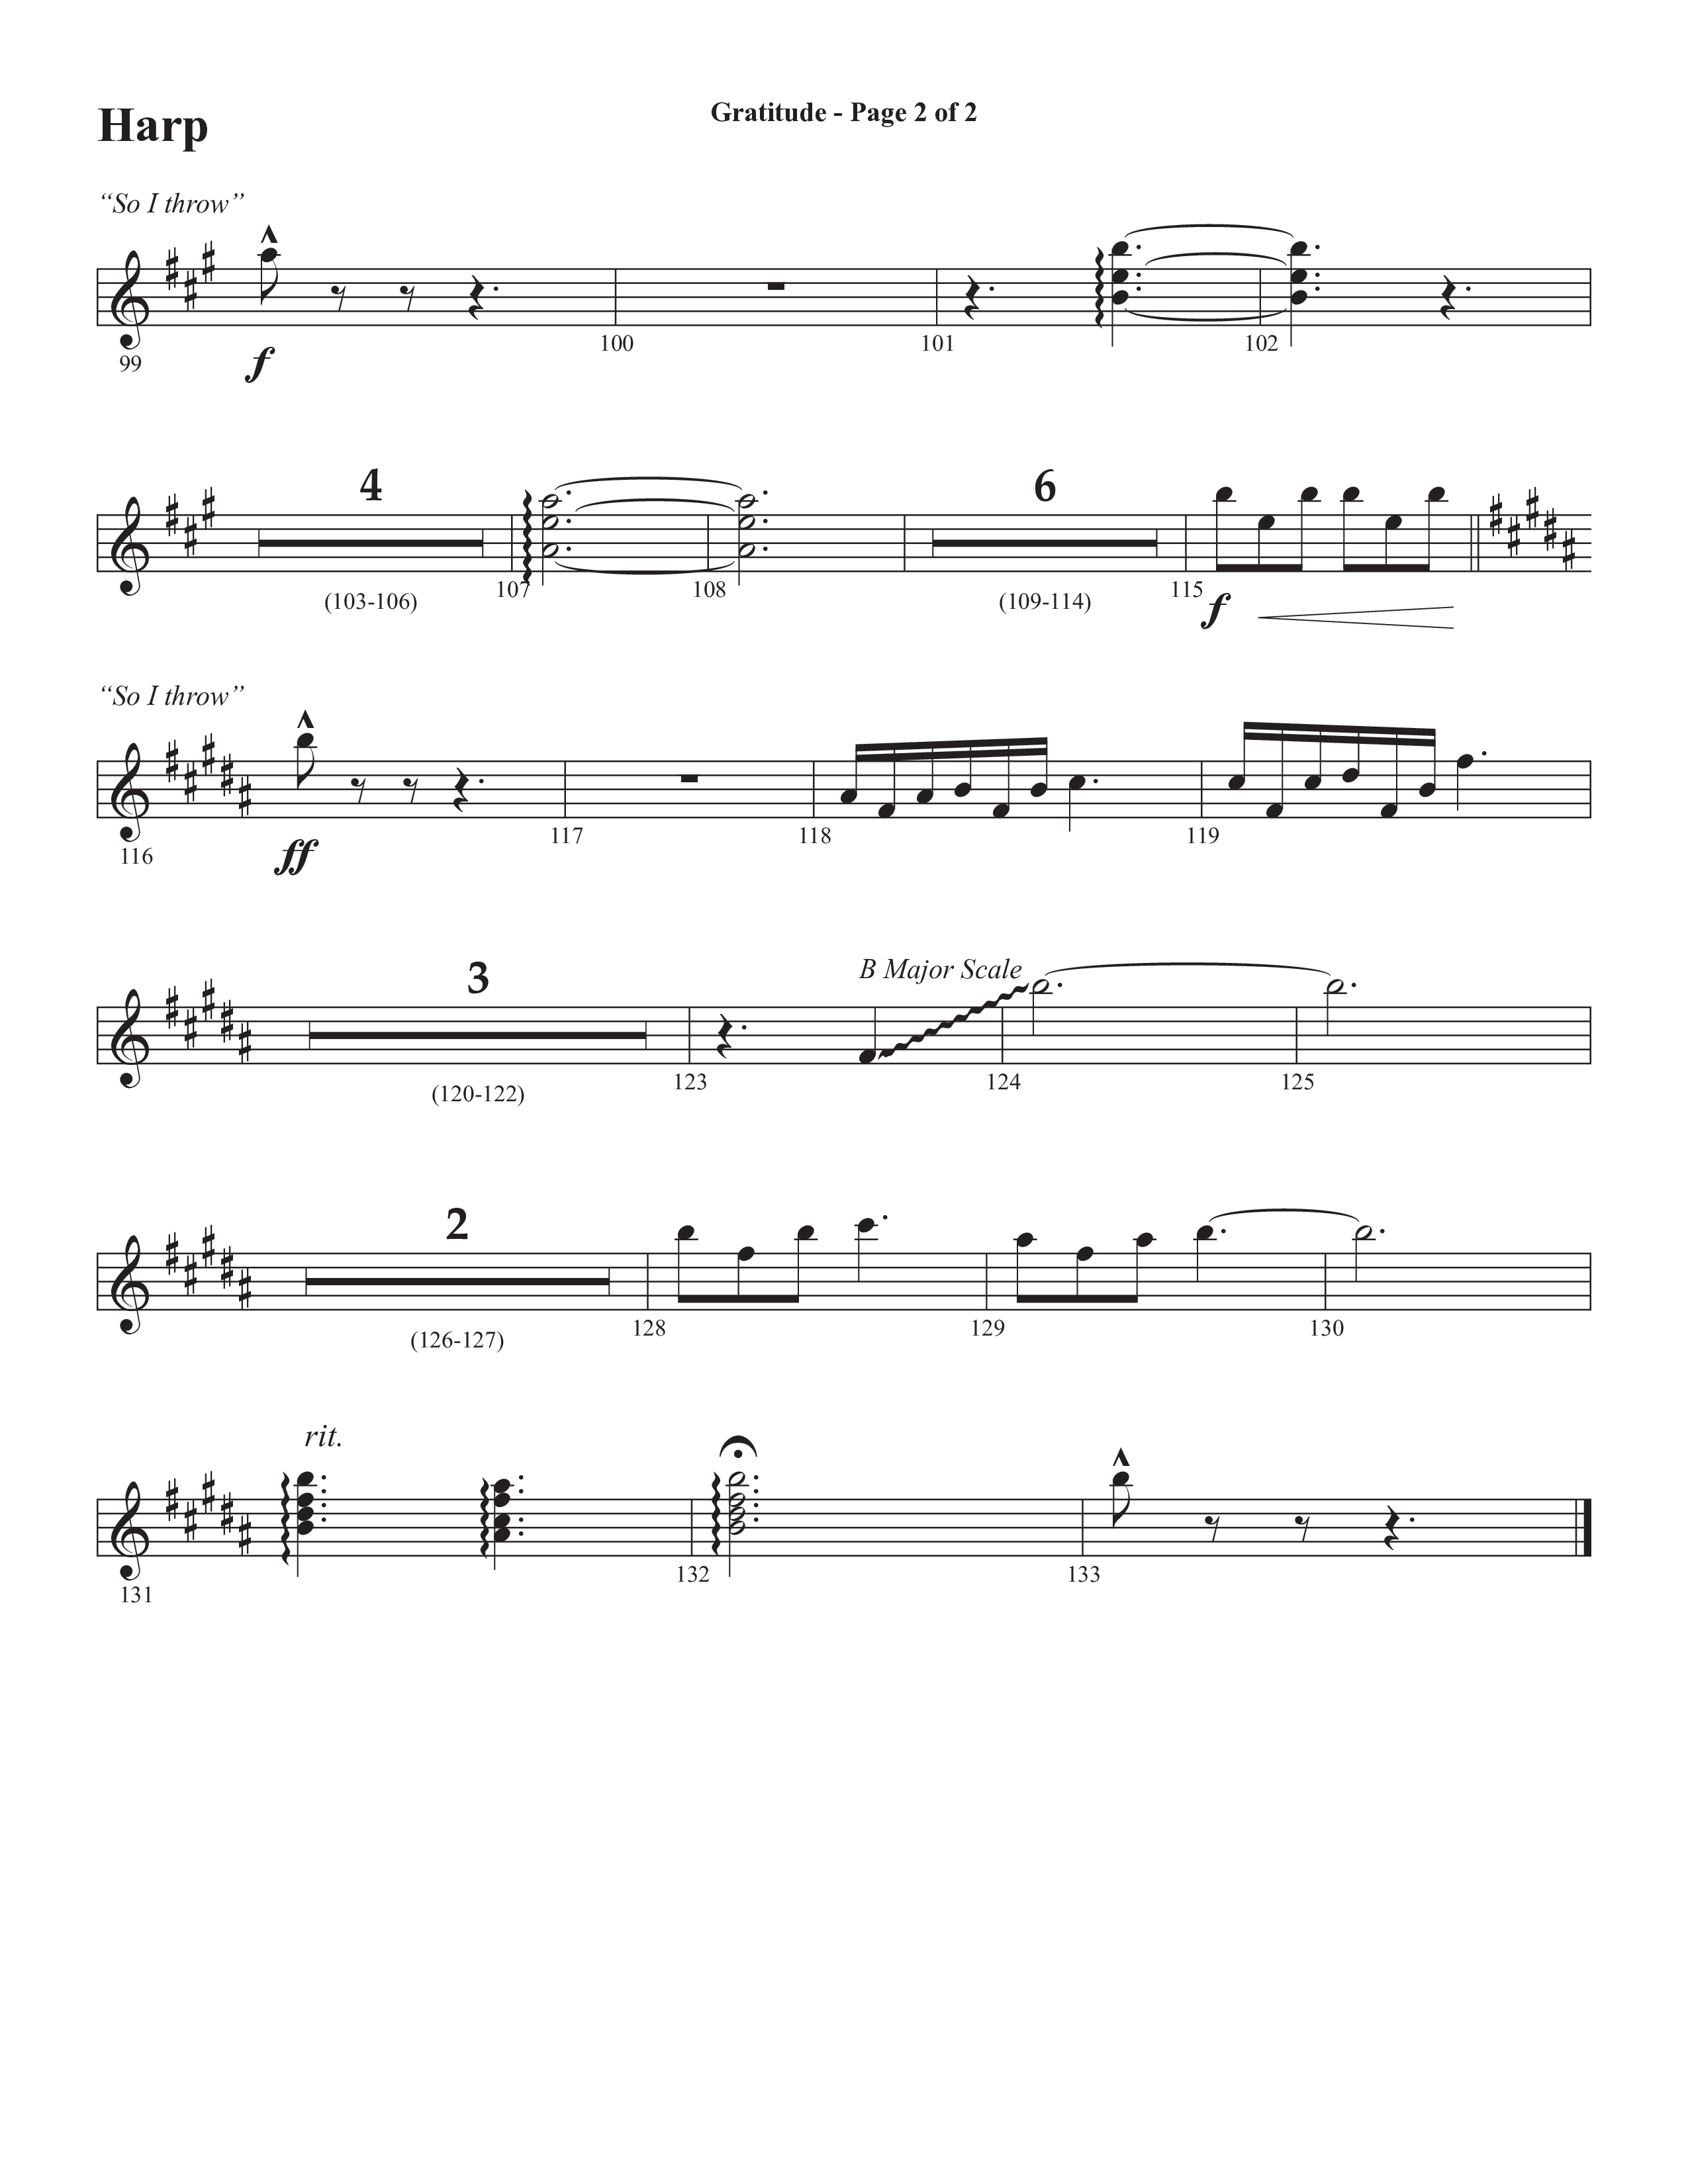 Gratitude (Choral Anthem SATB) Harp (Semsen Music / Arr. John Bolin / Orch. Cliff Duren)